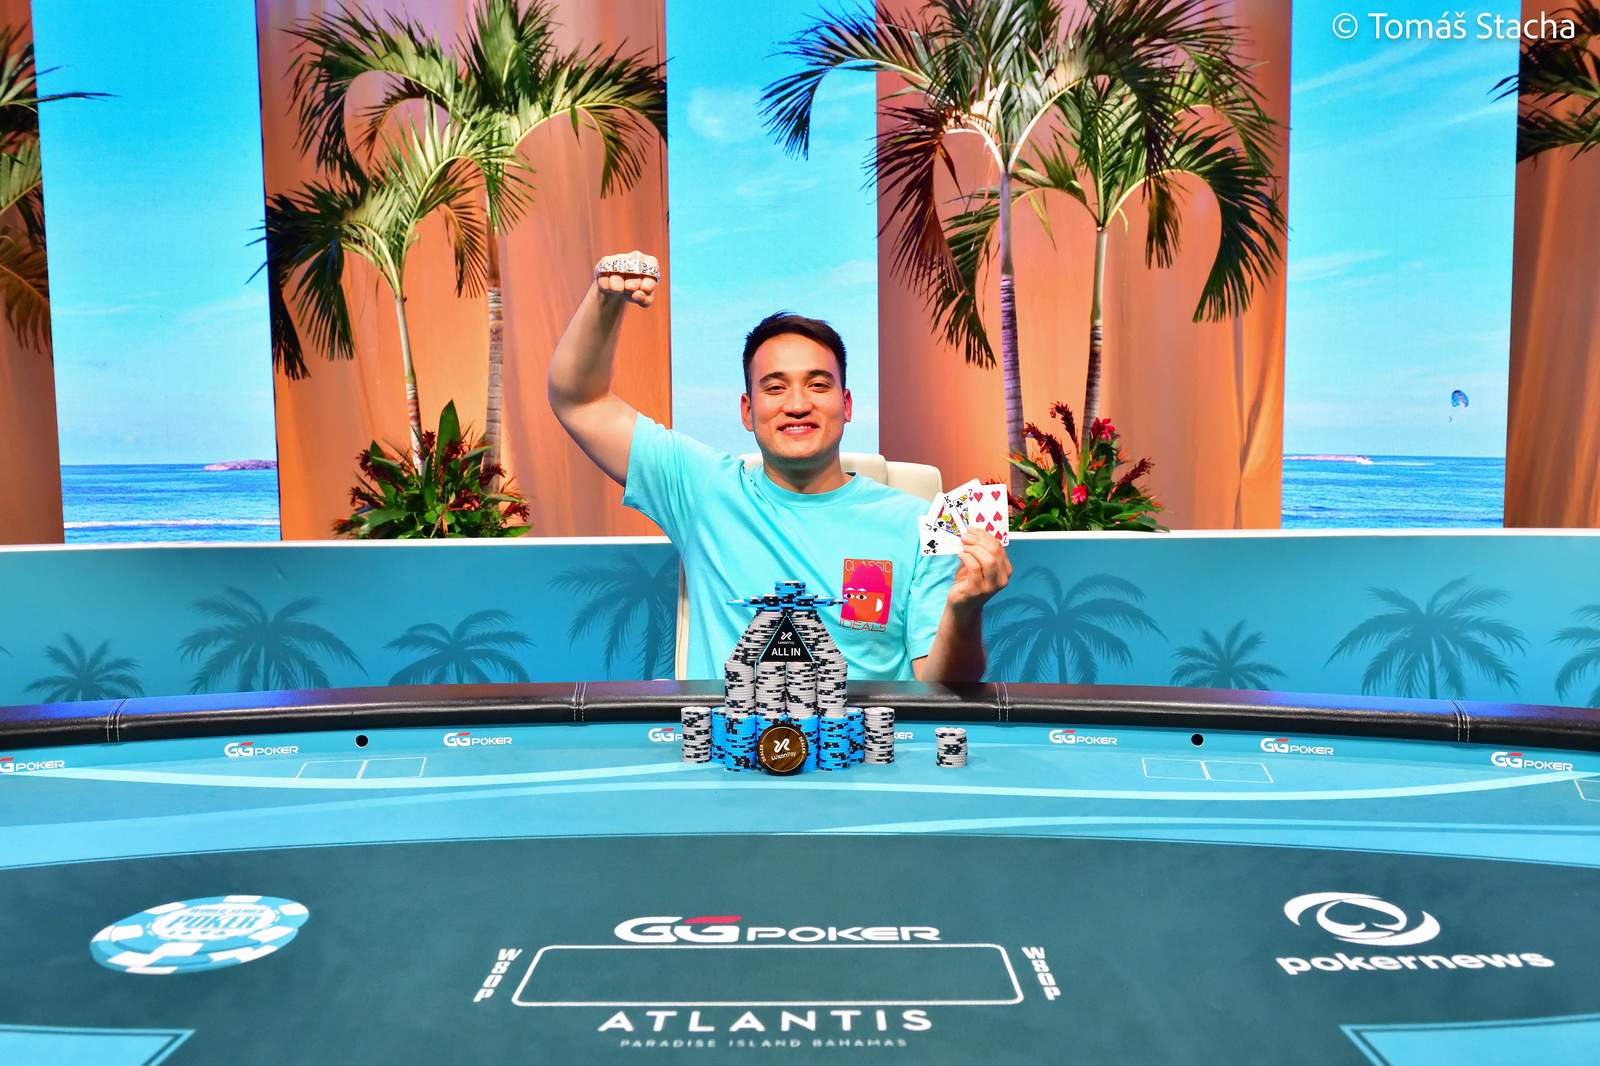 Dante Goya Wins 1st WSOP Bracelet in $10k PLO Championship for $277,700